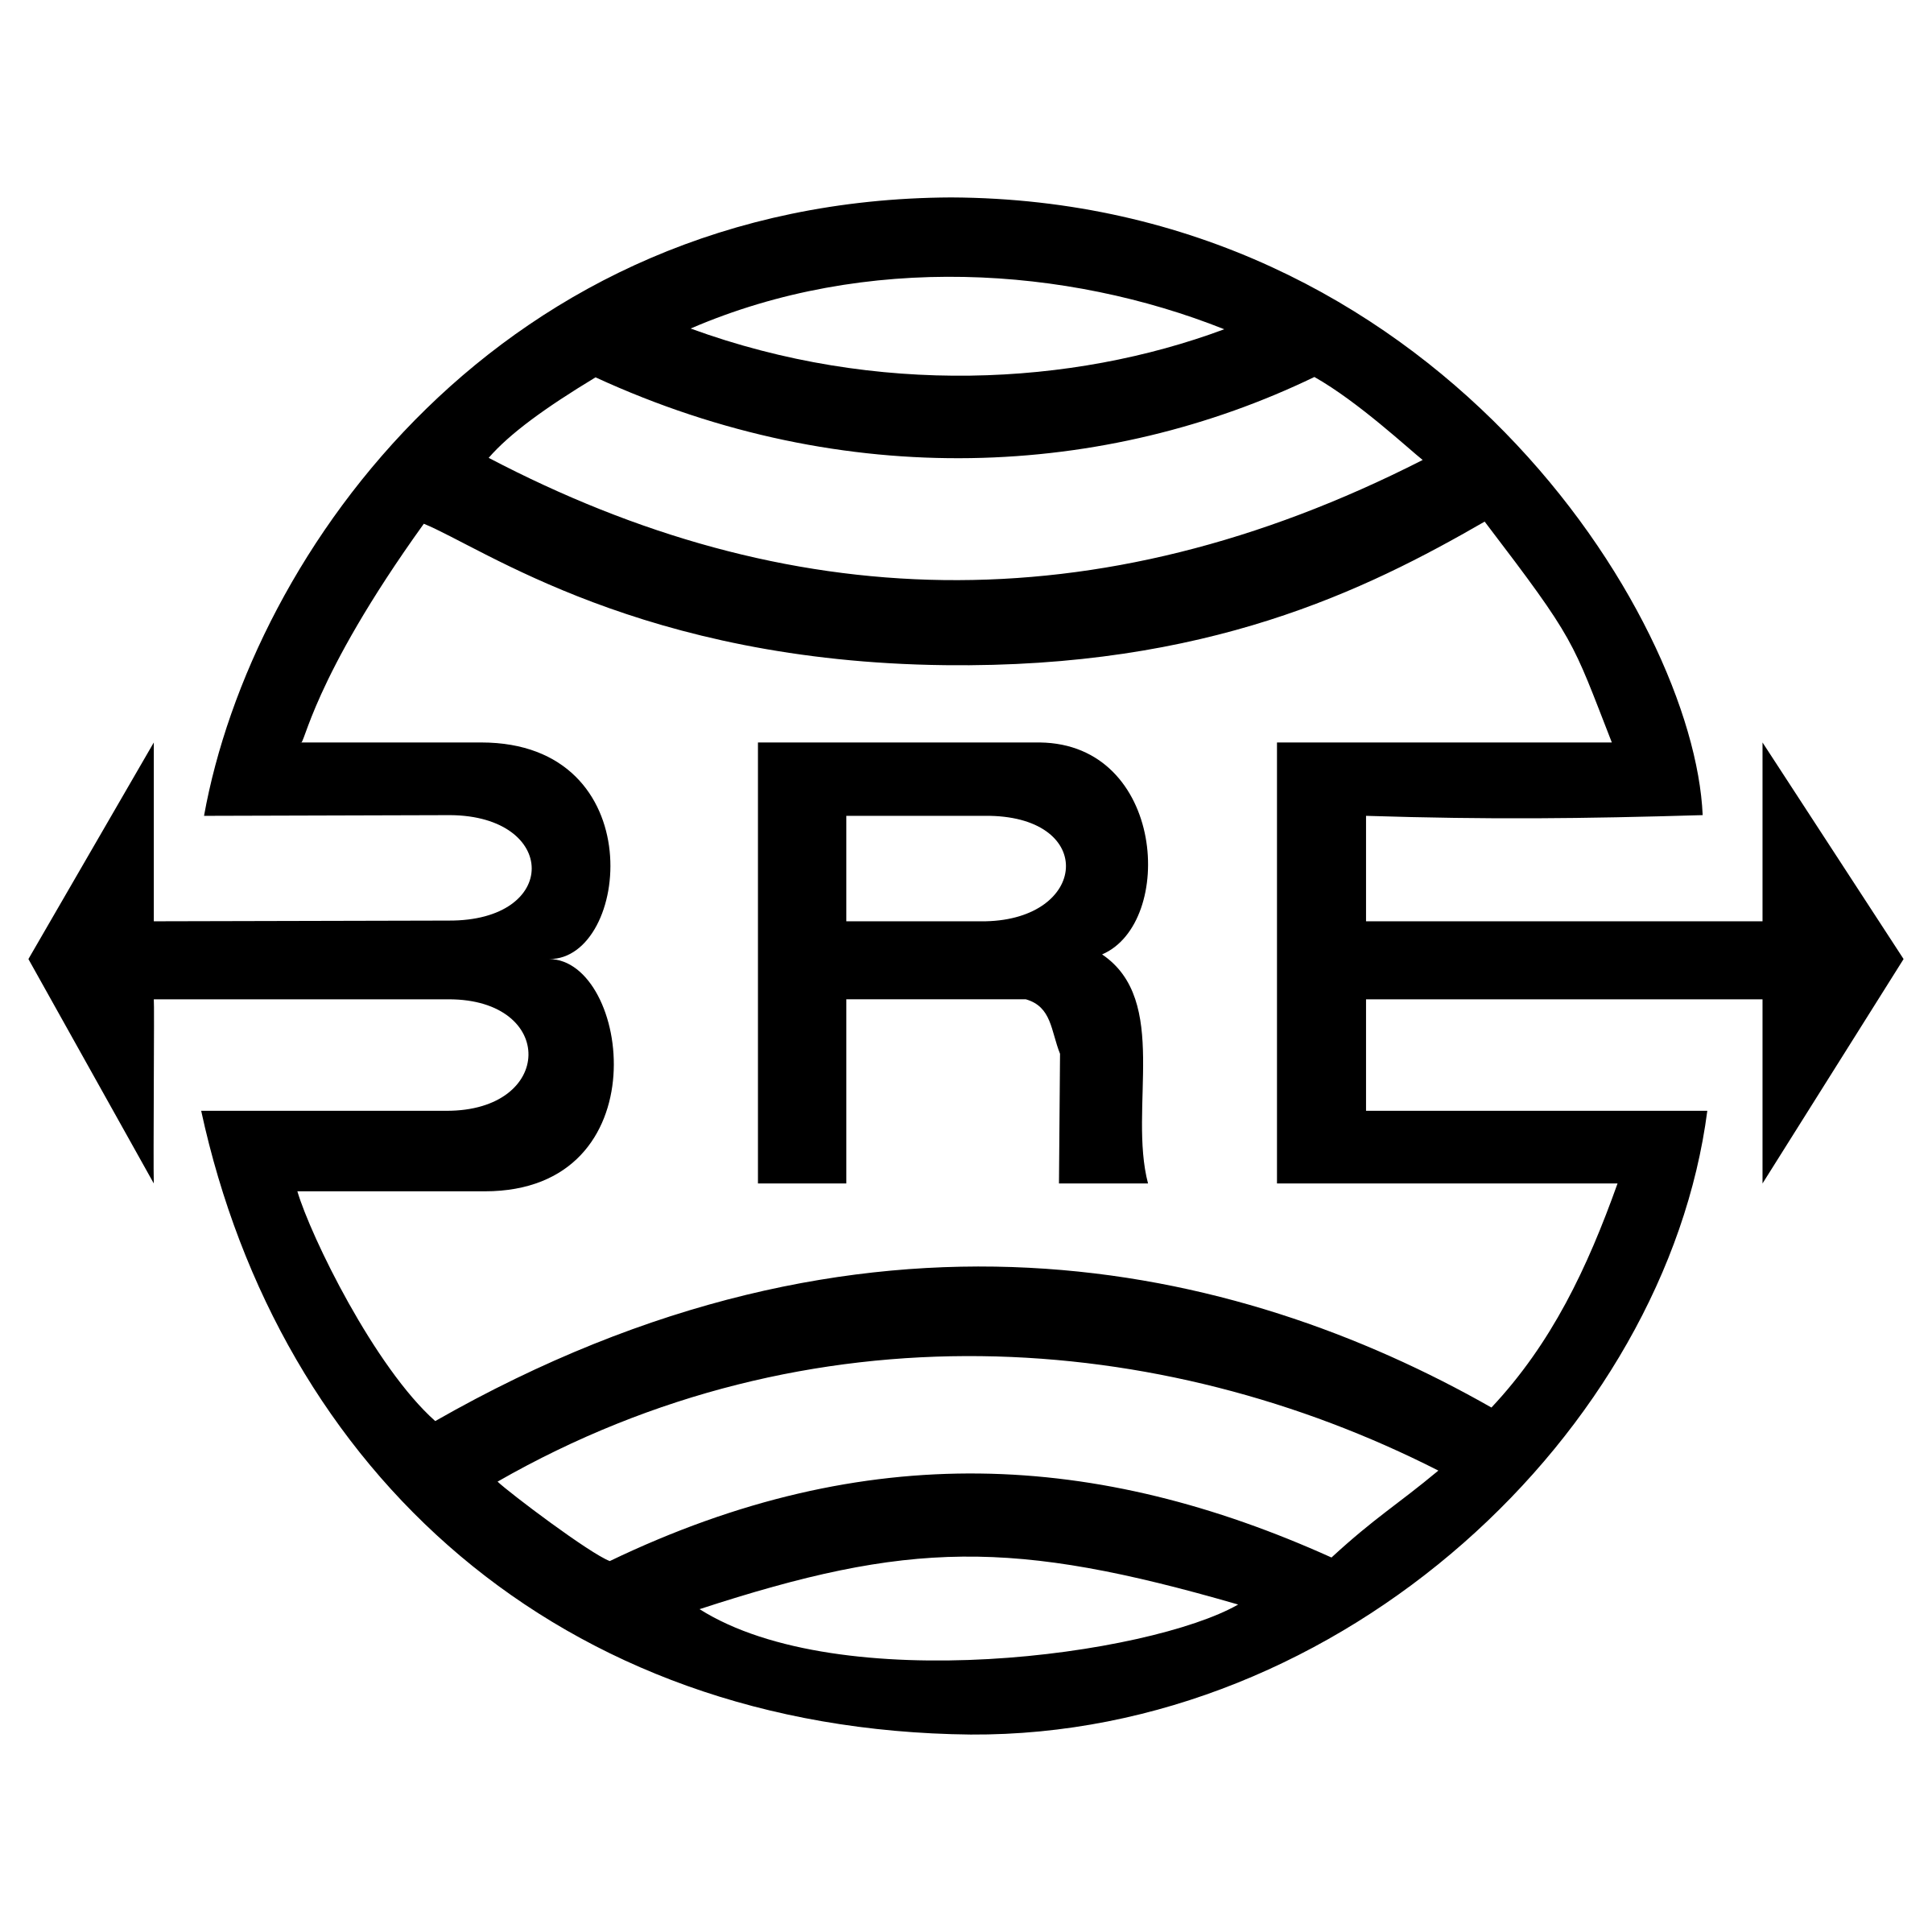 BRE Logo - BRE Logo PNG Transparent & SVG Vector - Freebie Supply